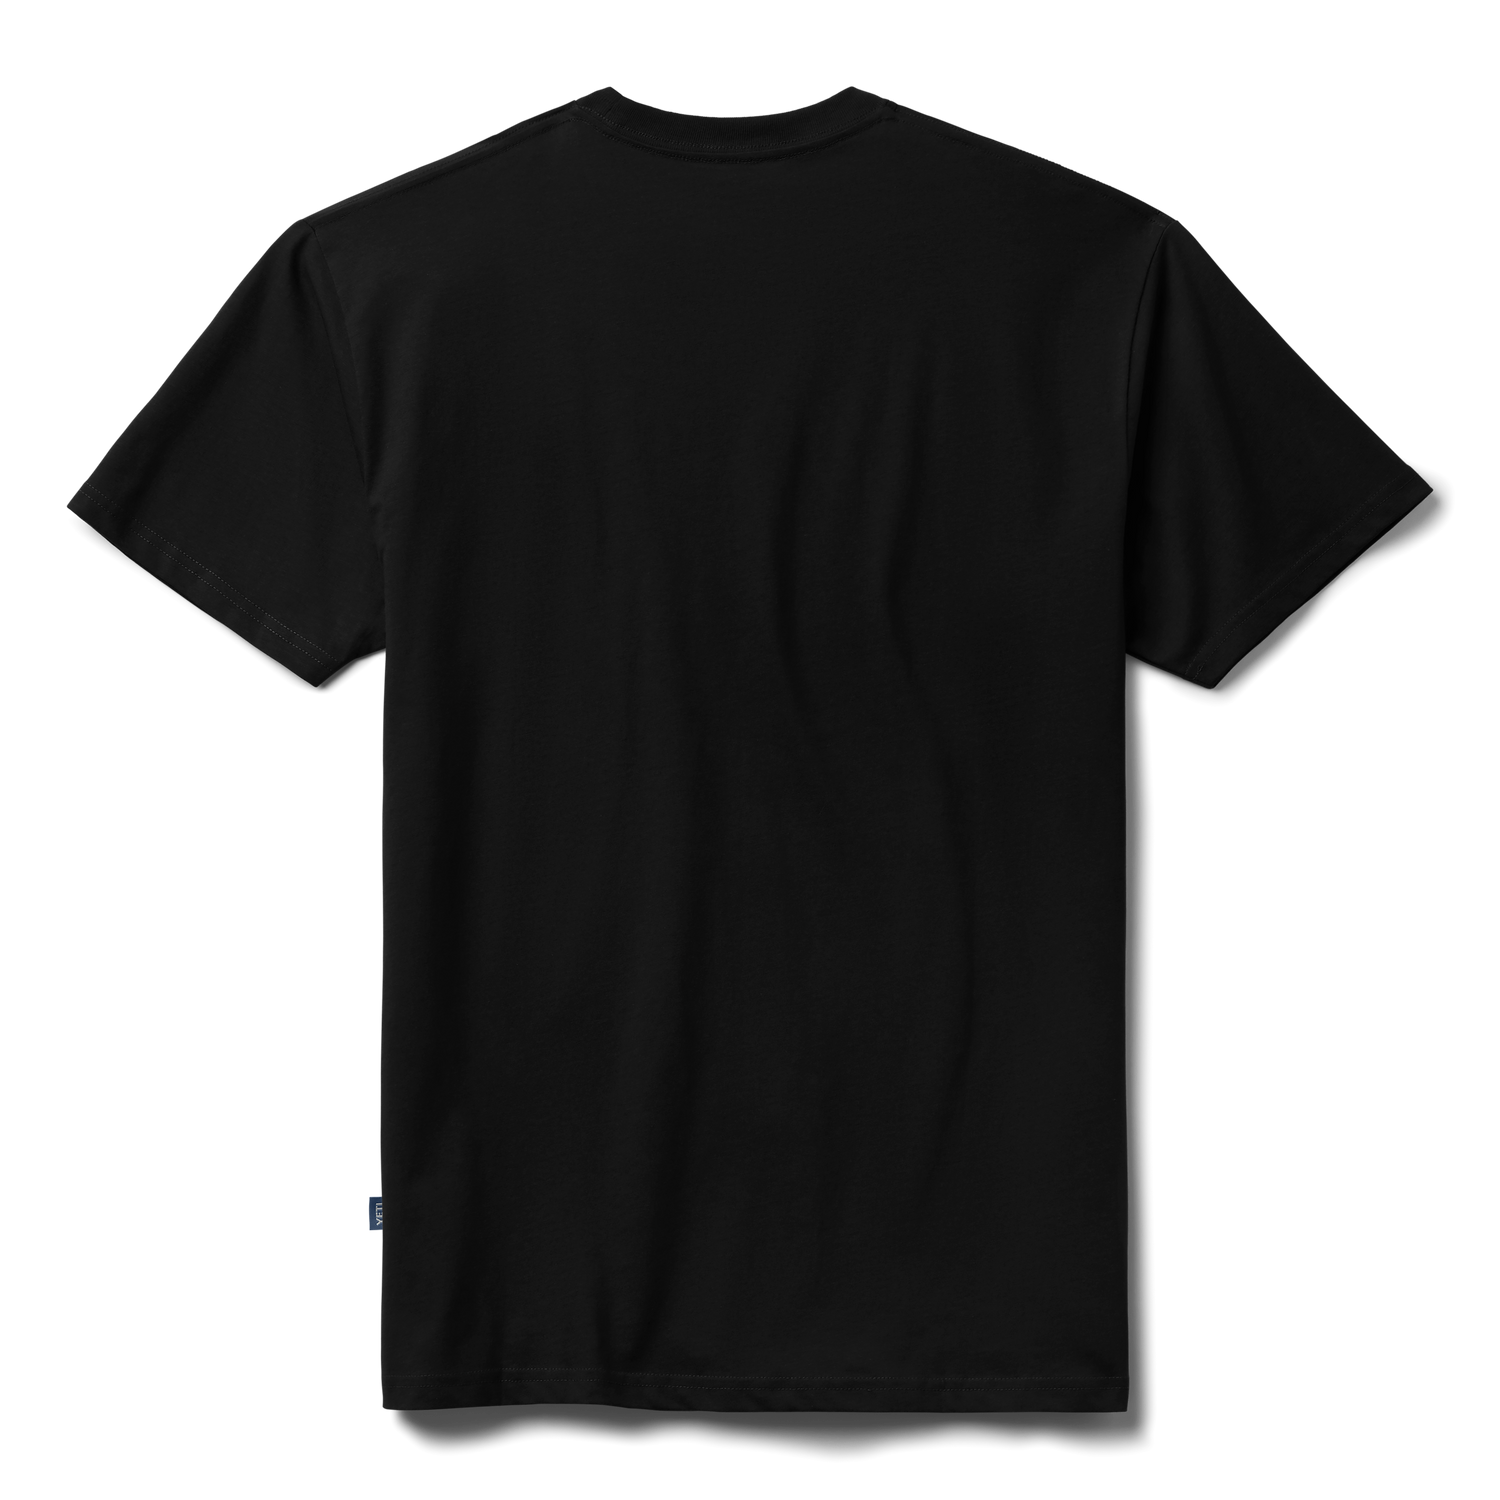 YETI T-shirt Premium a manica corta con logo Badge Nero/Grey